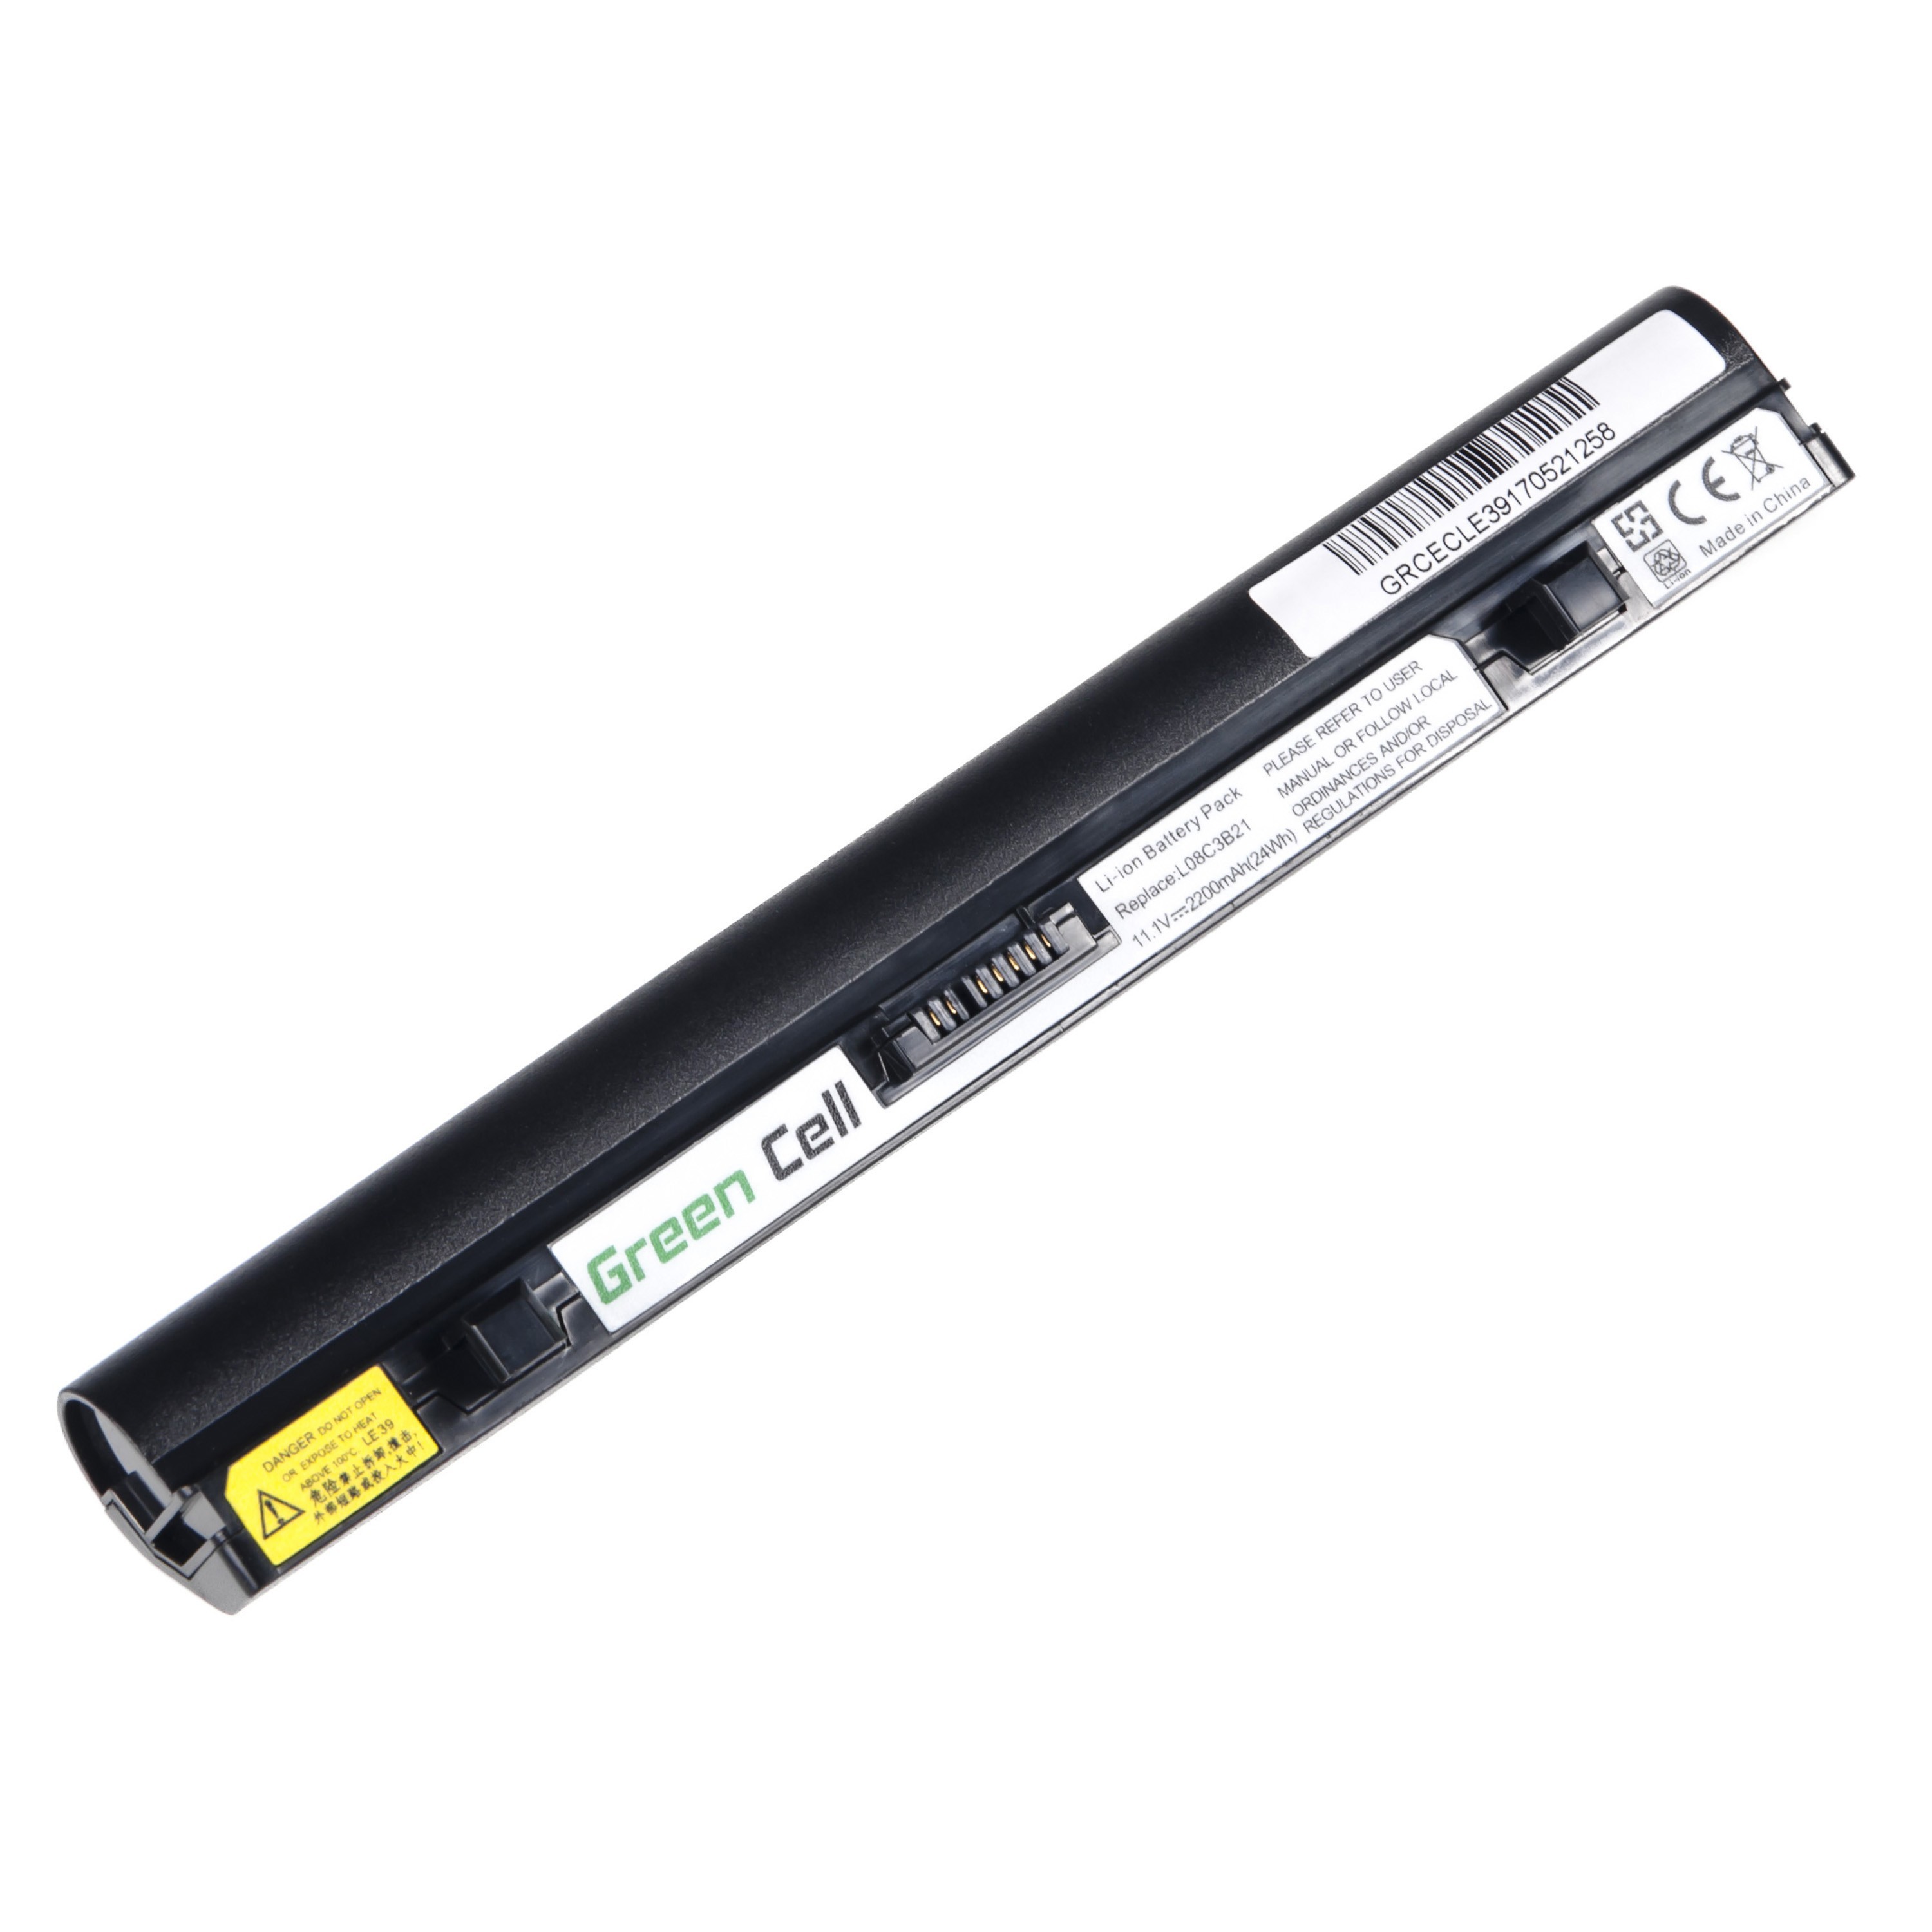 Batterij voor Lenovo IdeaPad S9 S9e S10 S10e S10C S12 (zwart) / 11,1V 2200mAh